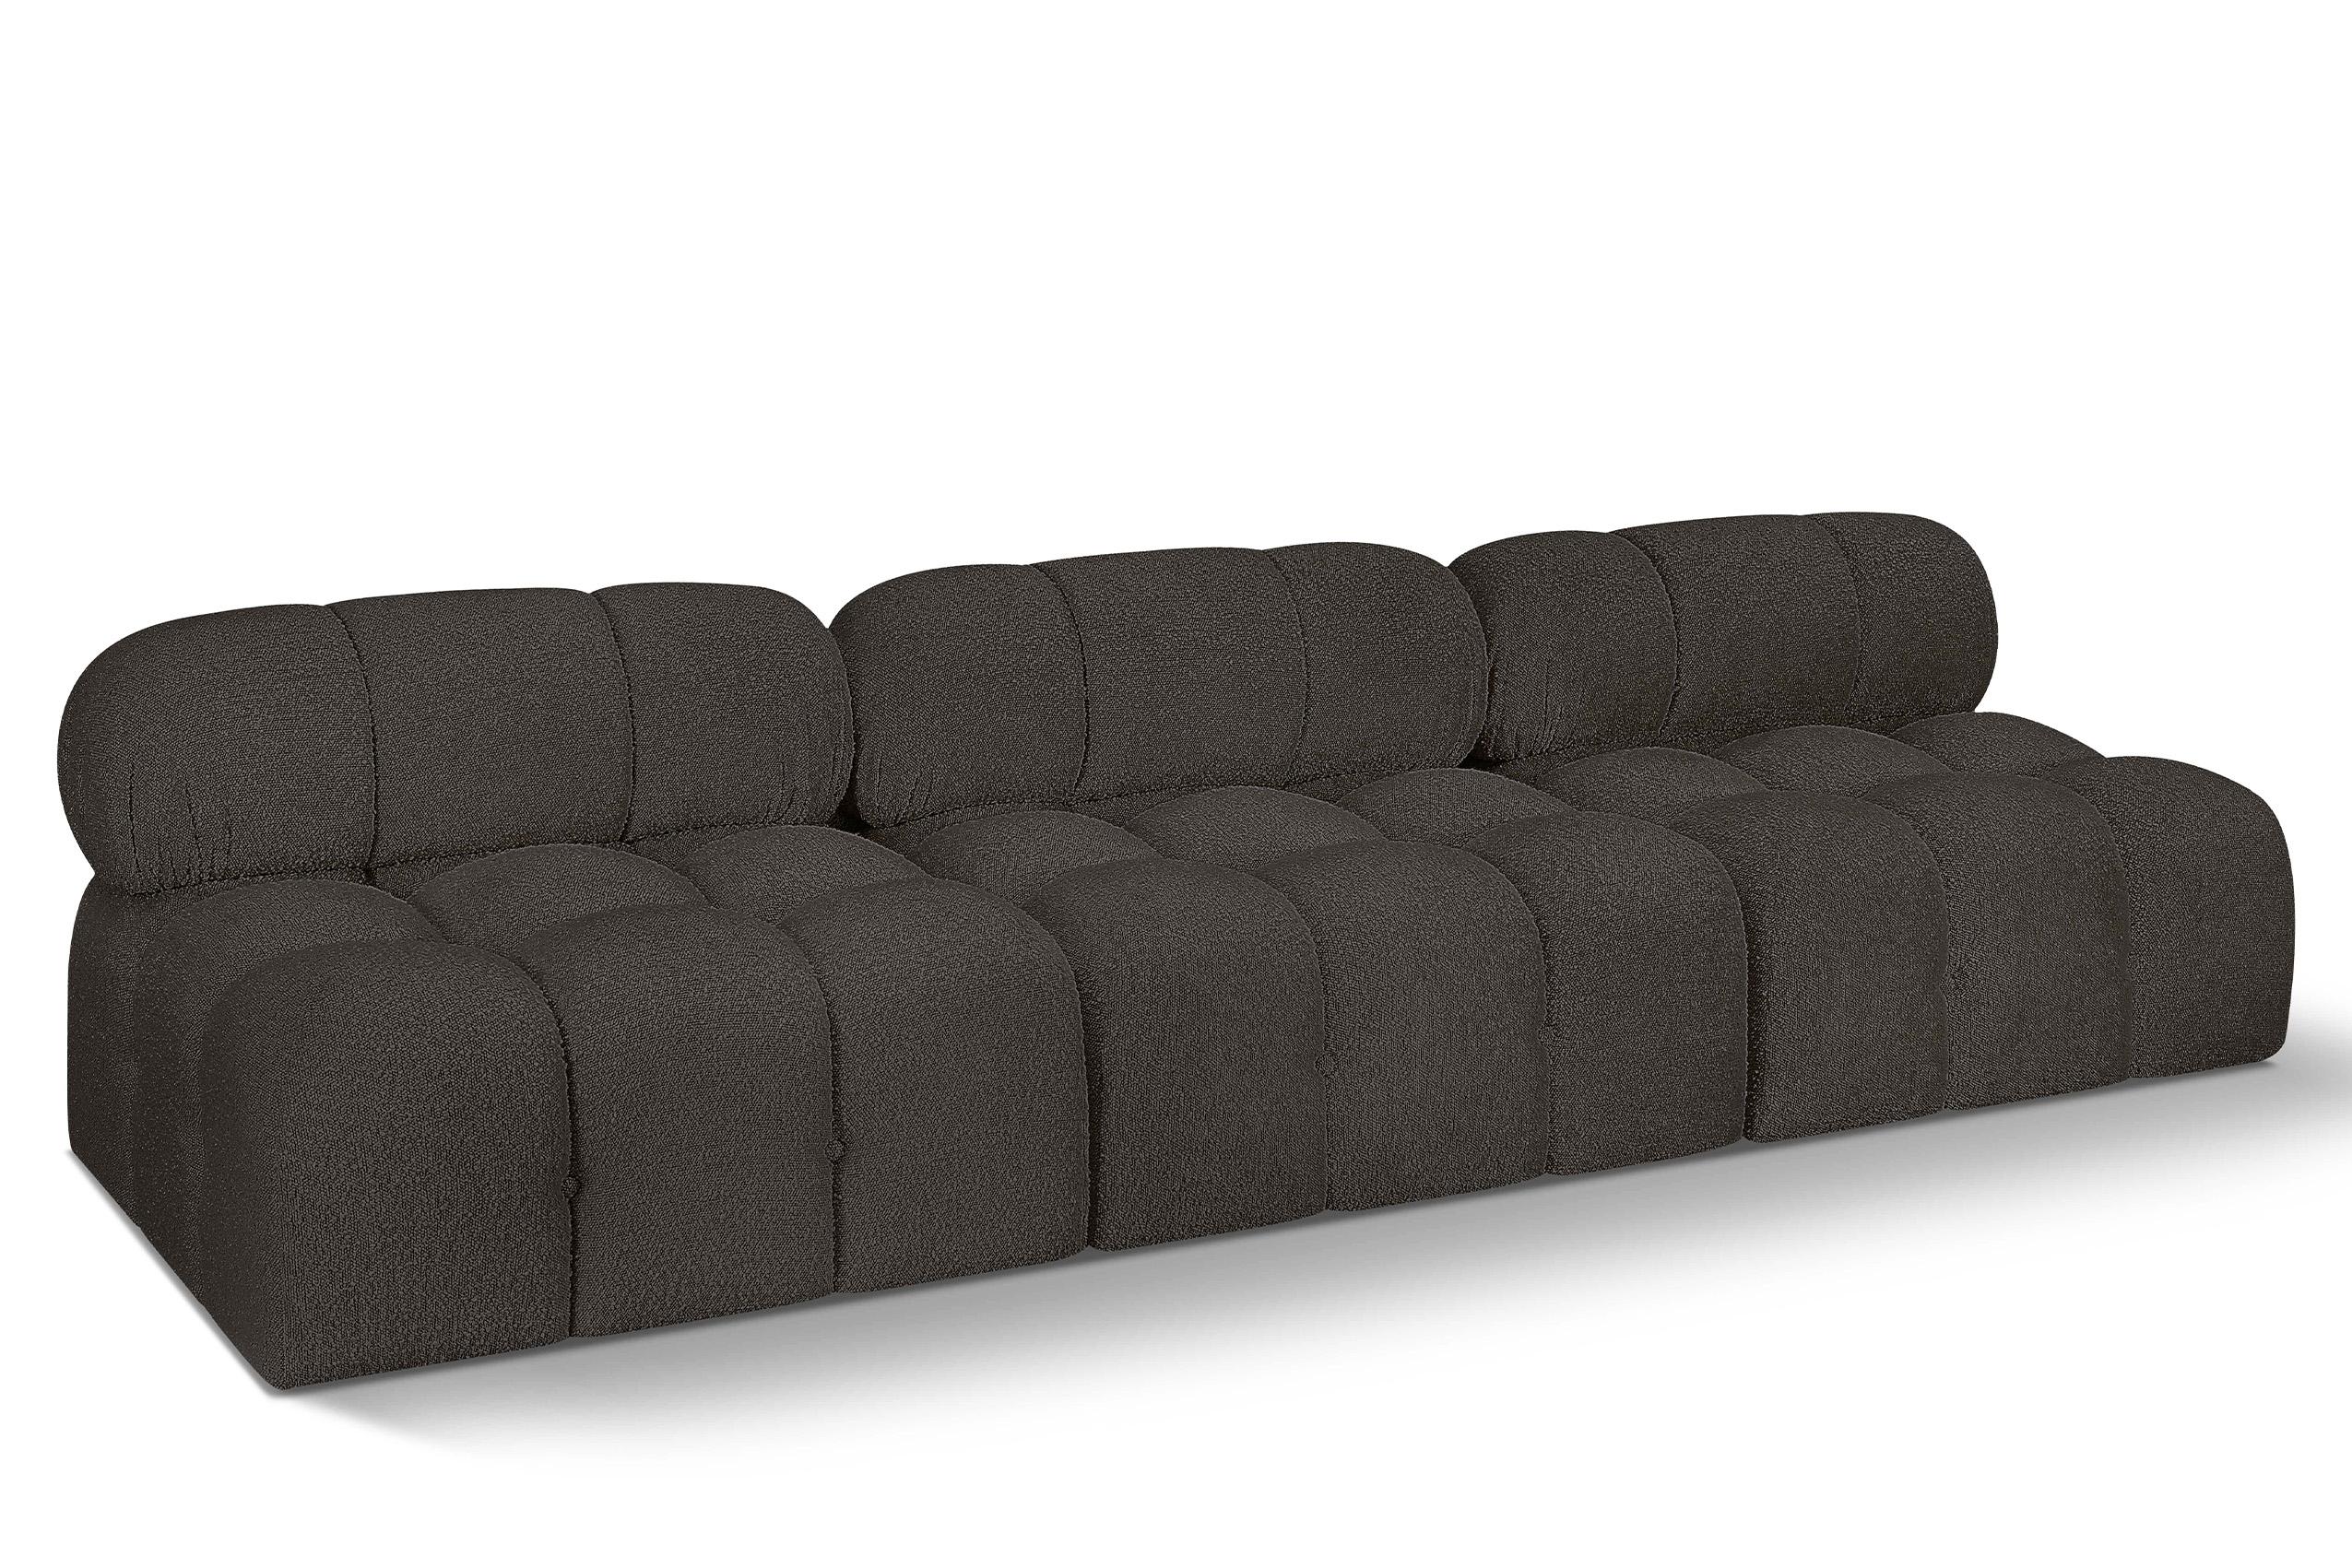 Contemporary, Modern Modular Sofa AMES 611Brown-S102B 611Brown-S102B in Brown 